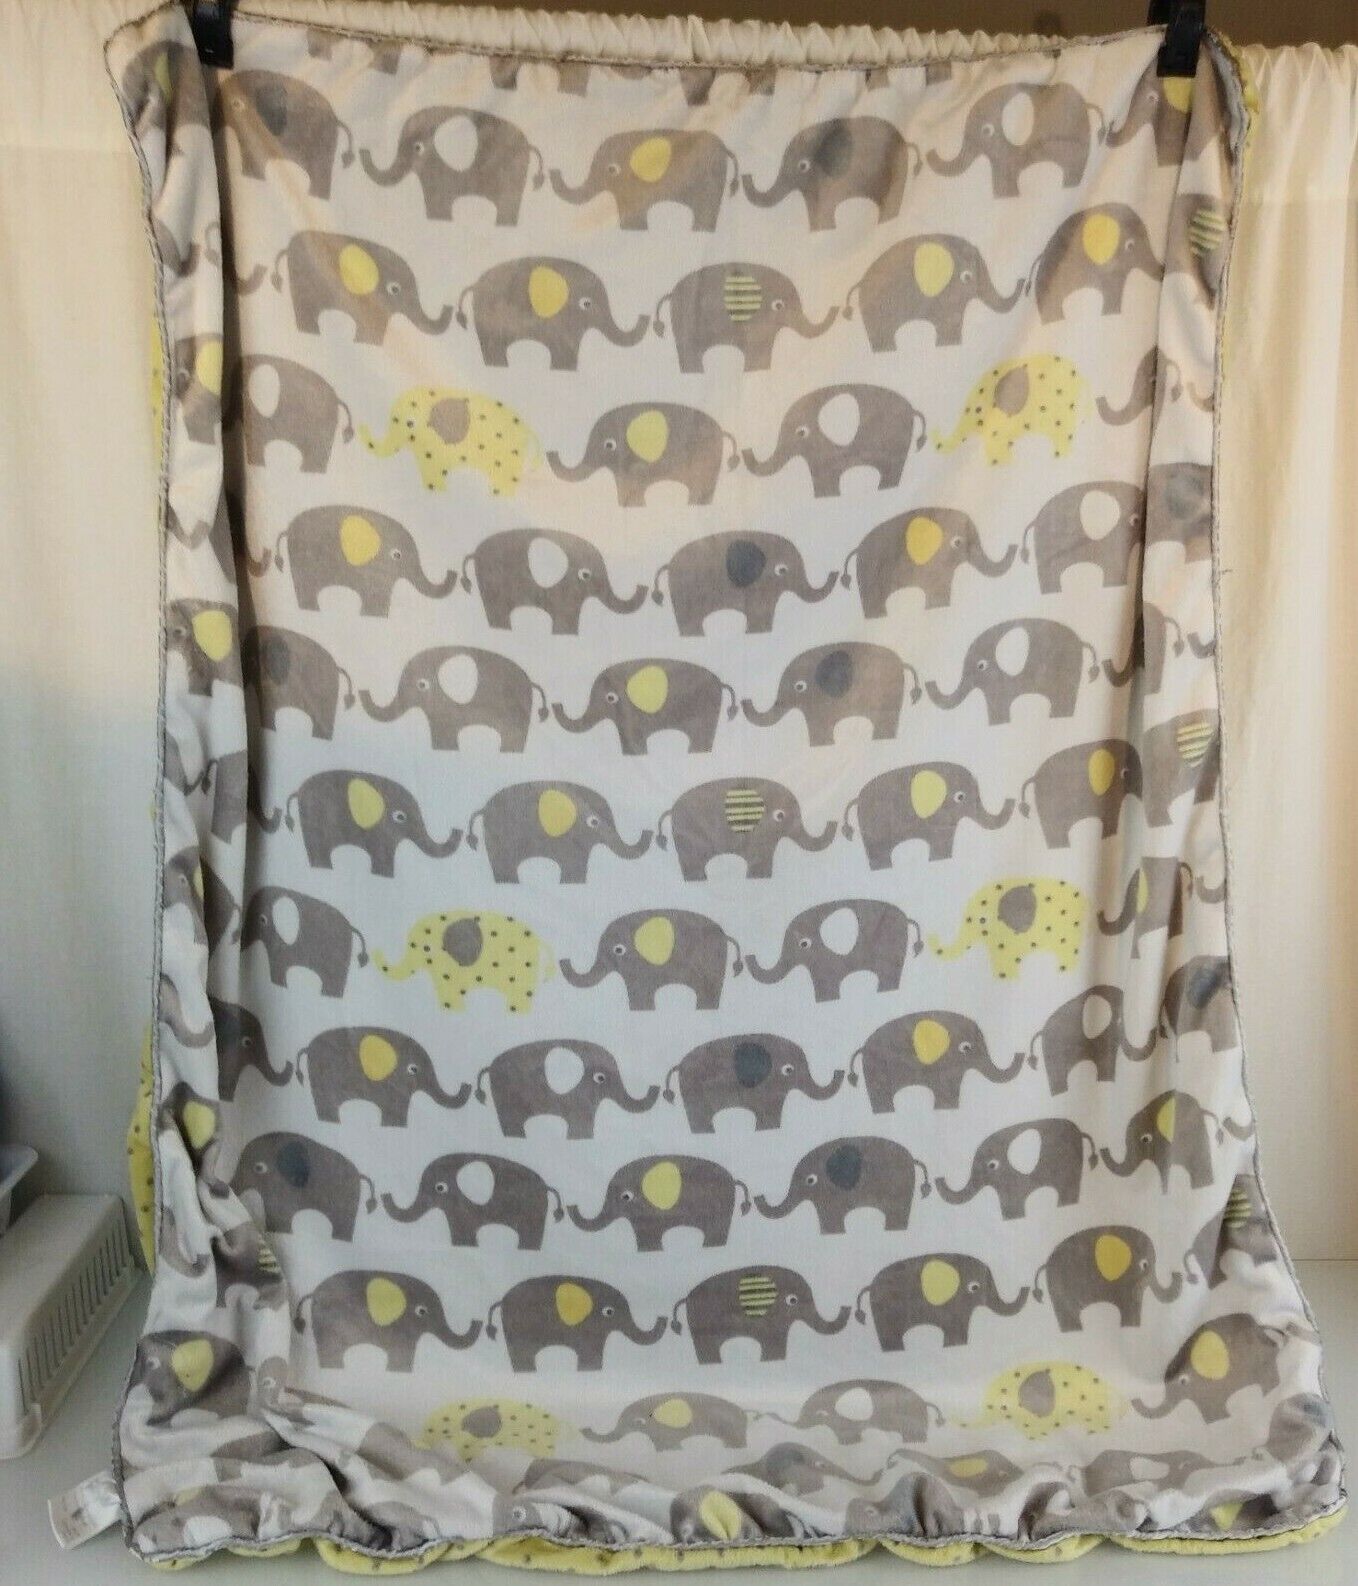 SL S L Home Fashions Gray Yellow Elephant Polka Dot Baby Blanket Satin Trim Laatste werken, erg populair